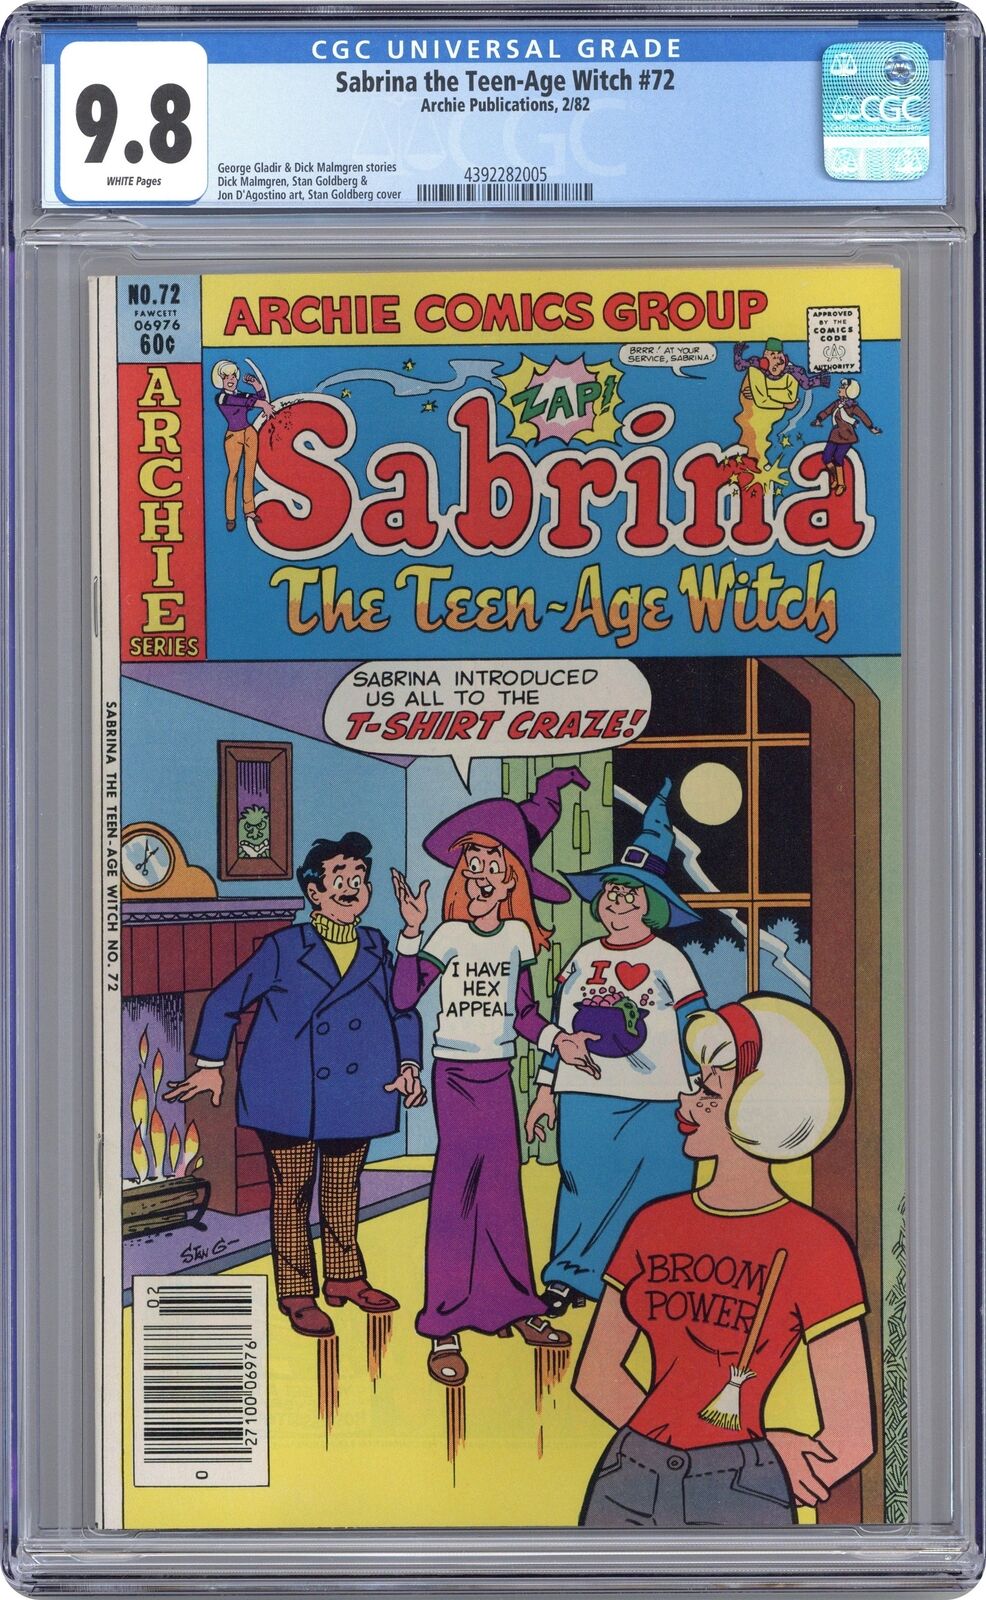 Sabrina the Teenage Witch #72 CGC 9.8 1982 4392282005